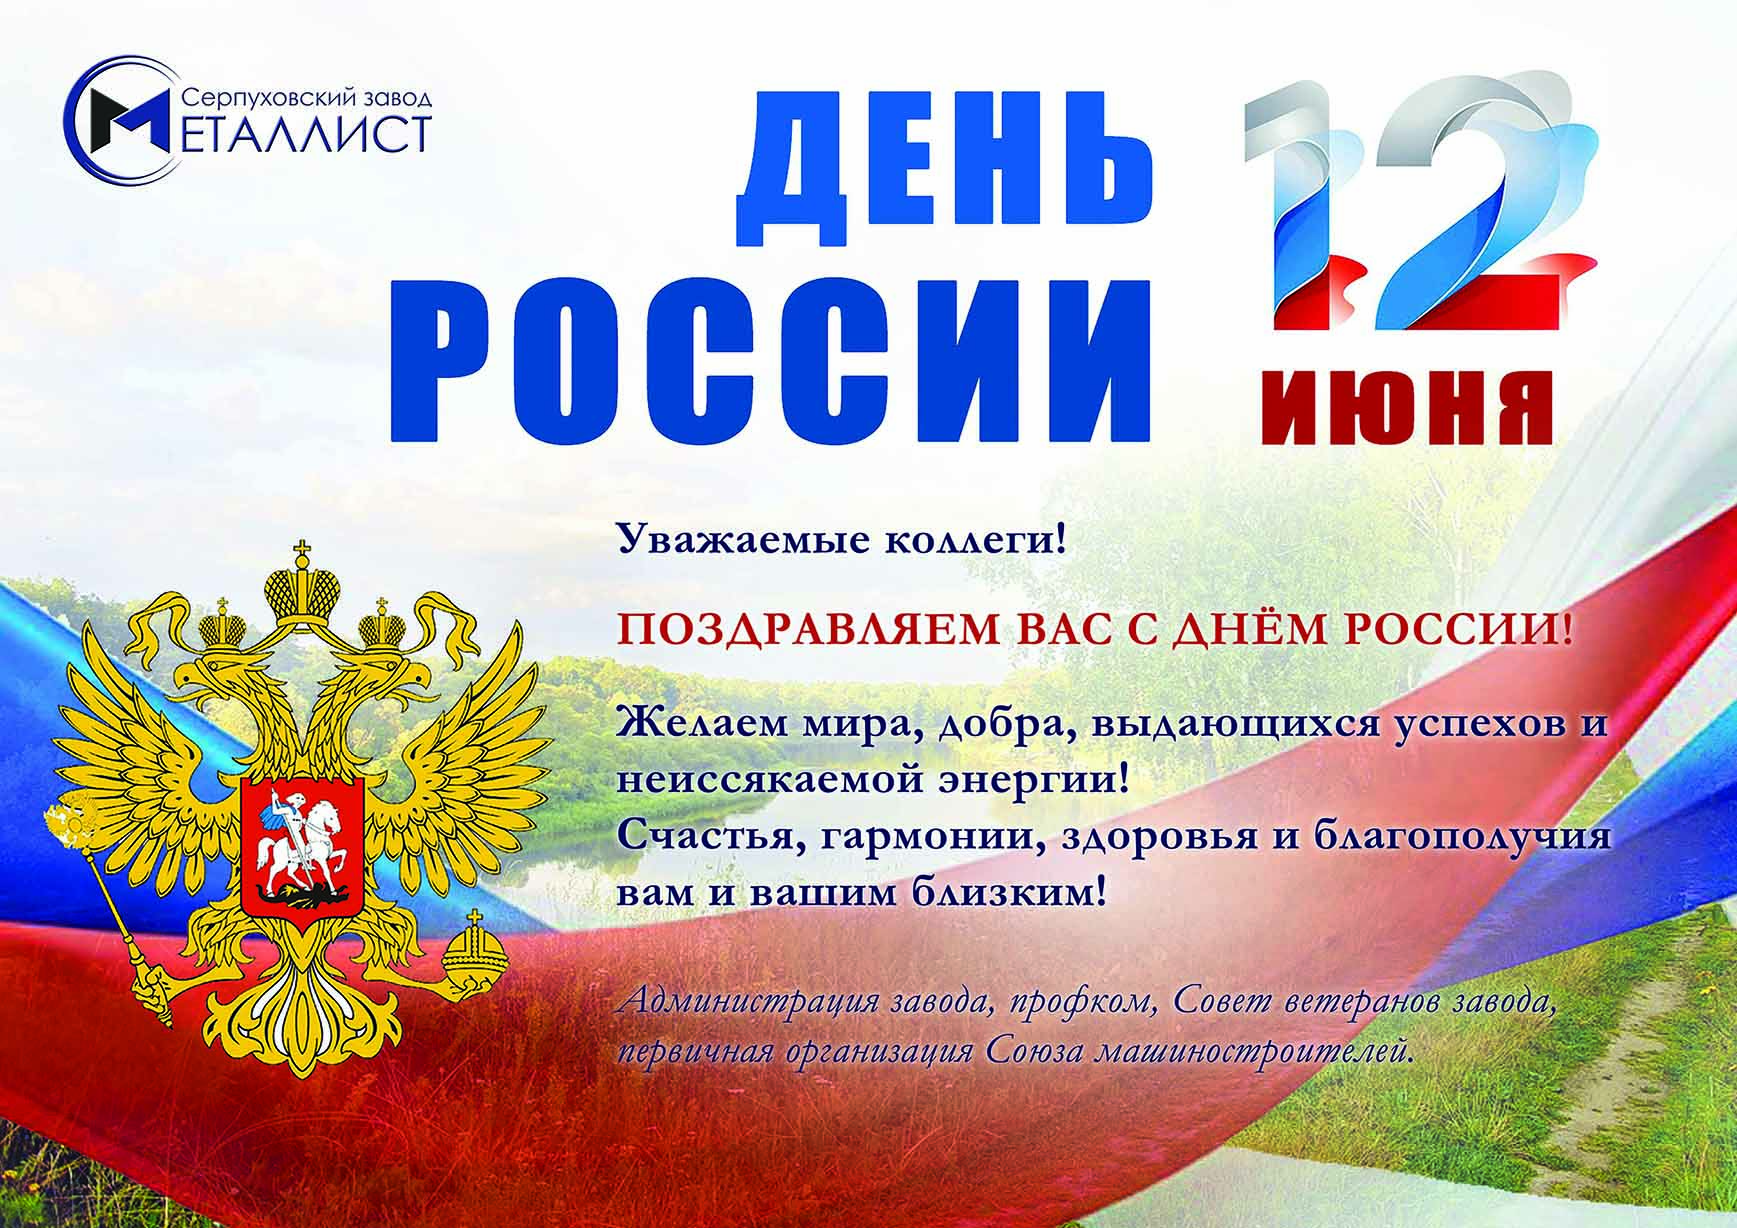 The Russian Federation celebrates 2021